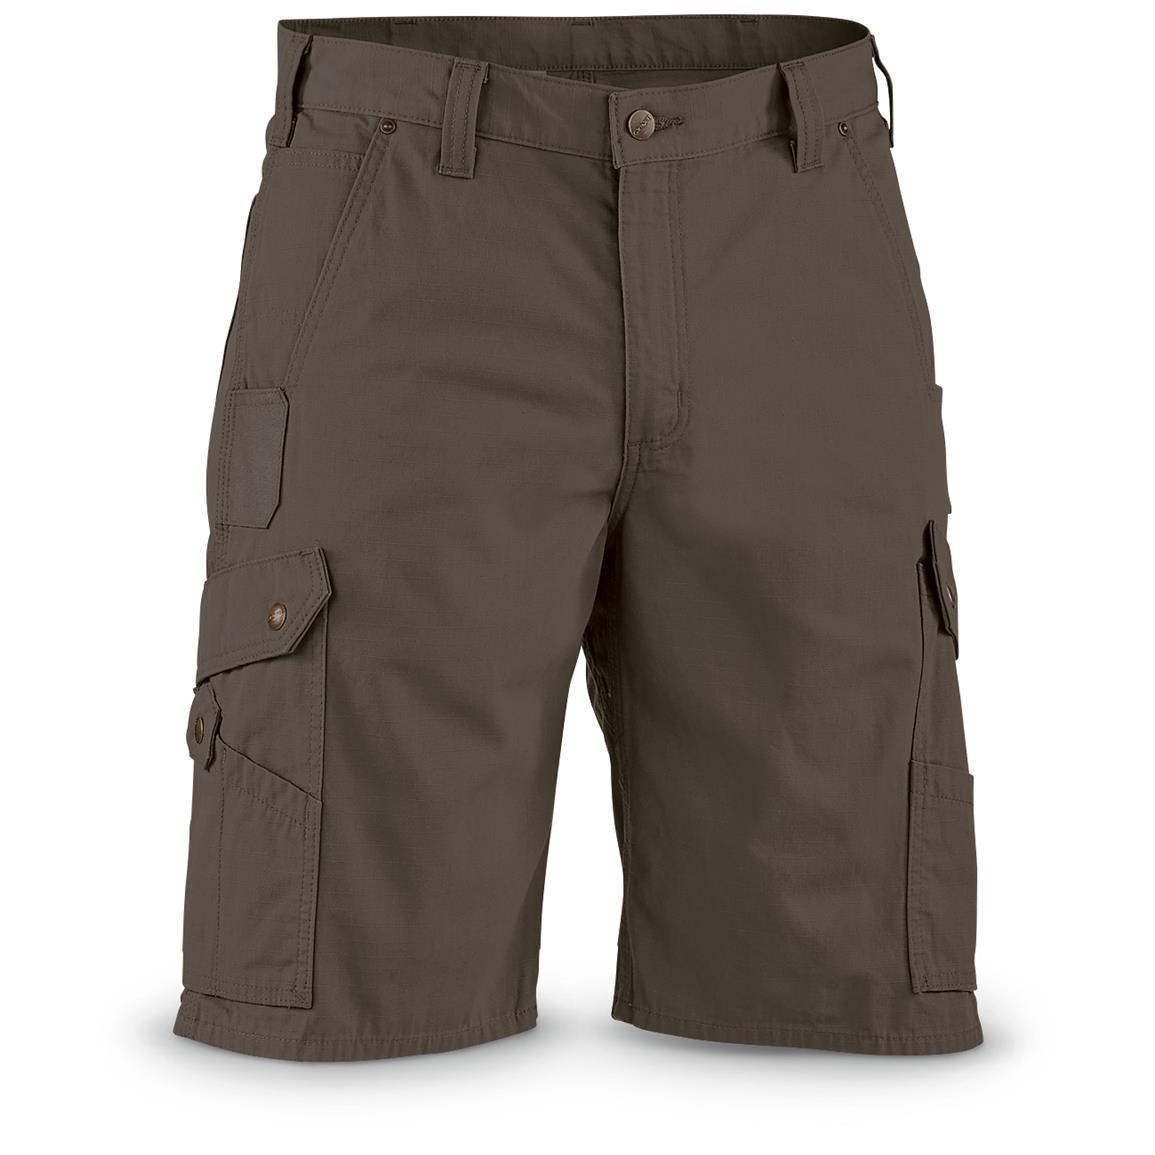 Carhartt Men's Cargo Work Shorts, Irregular - 665223, Shorts at ...